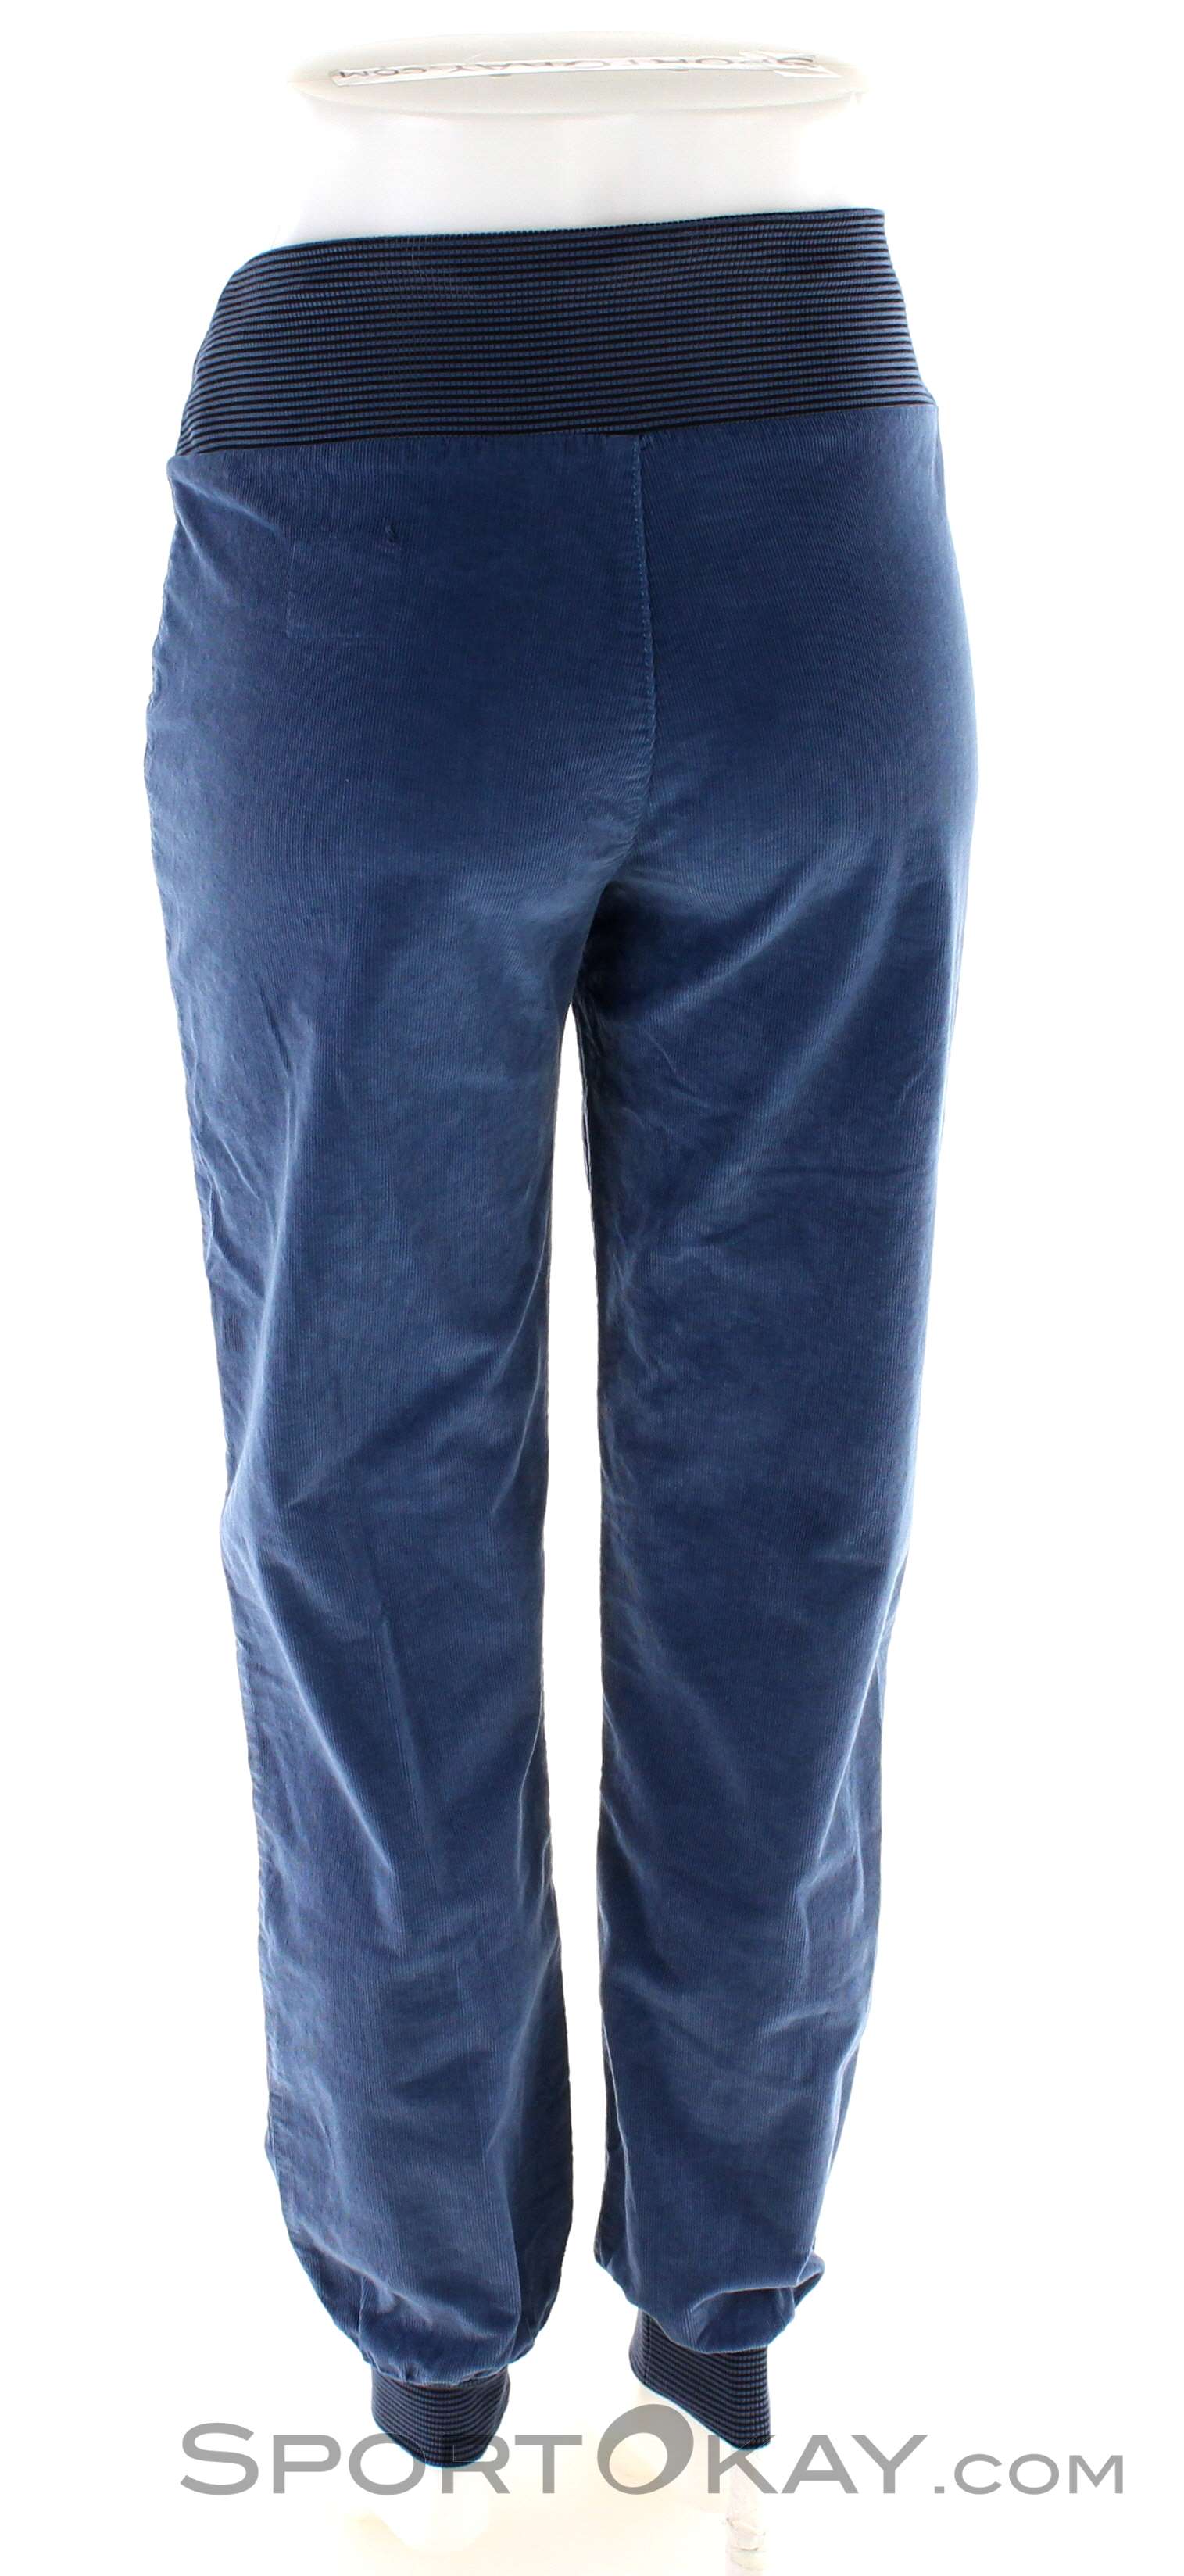 E9 Iuppi Women - Cord Climbing Pants for Ladies Vintage Blue